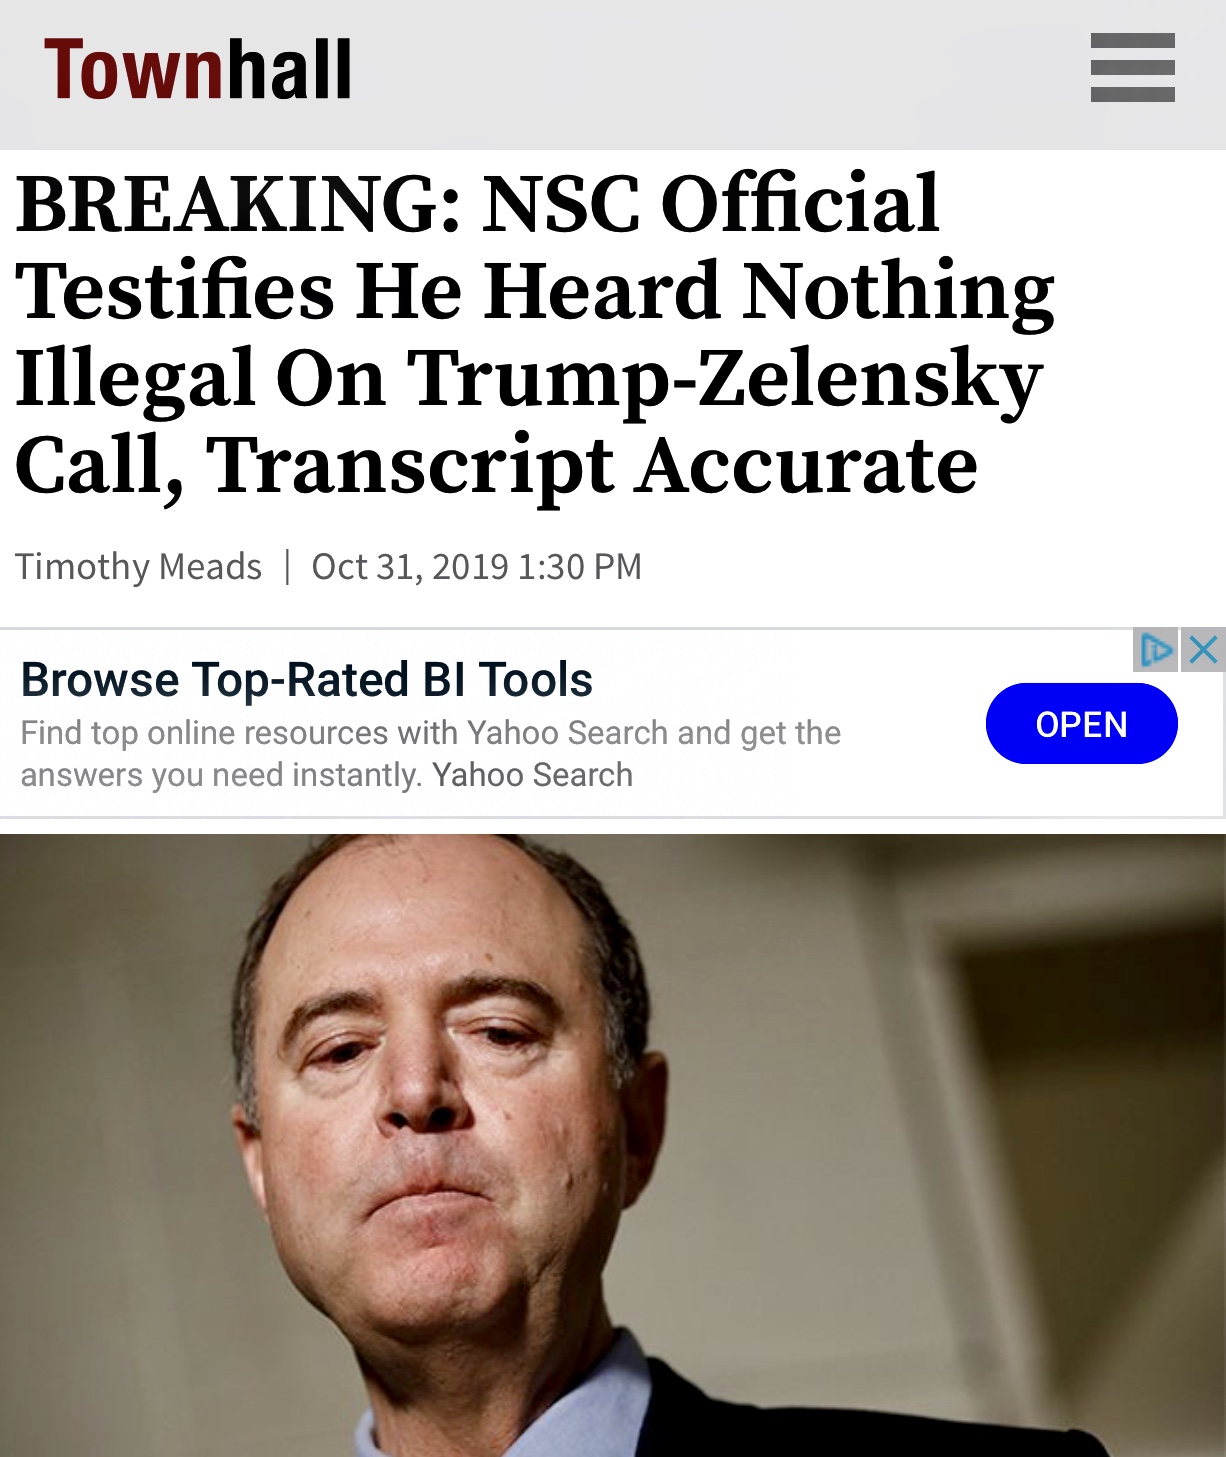 BREAKING NEWS NSC Official Testifies He Heard Nothing Illegal On Trump-Zelensky Call